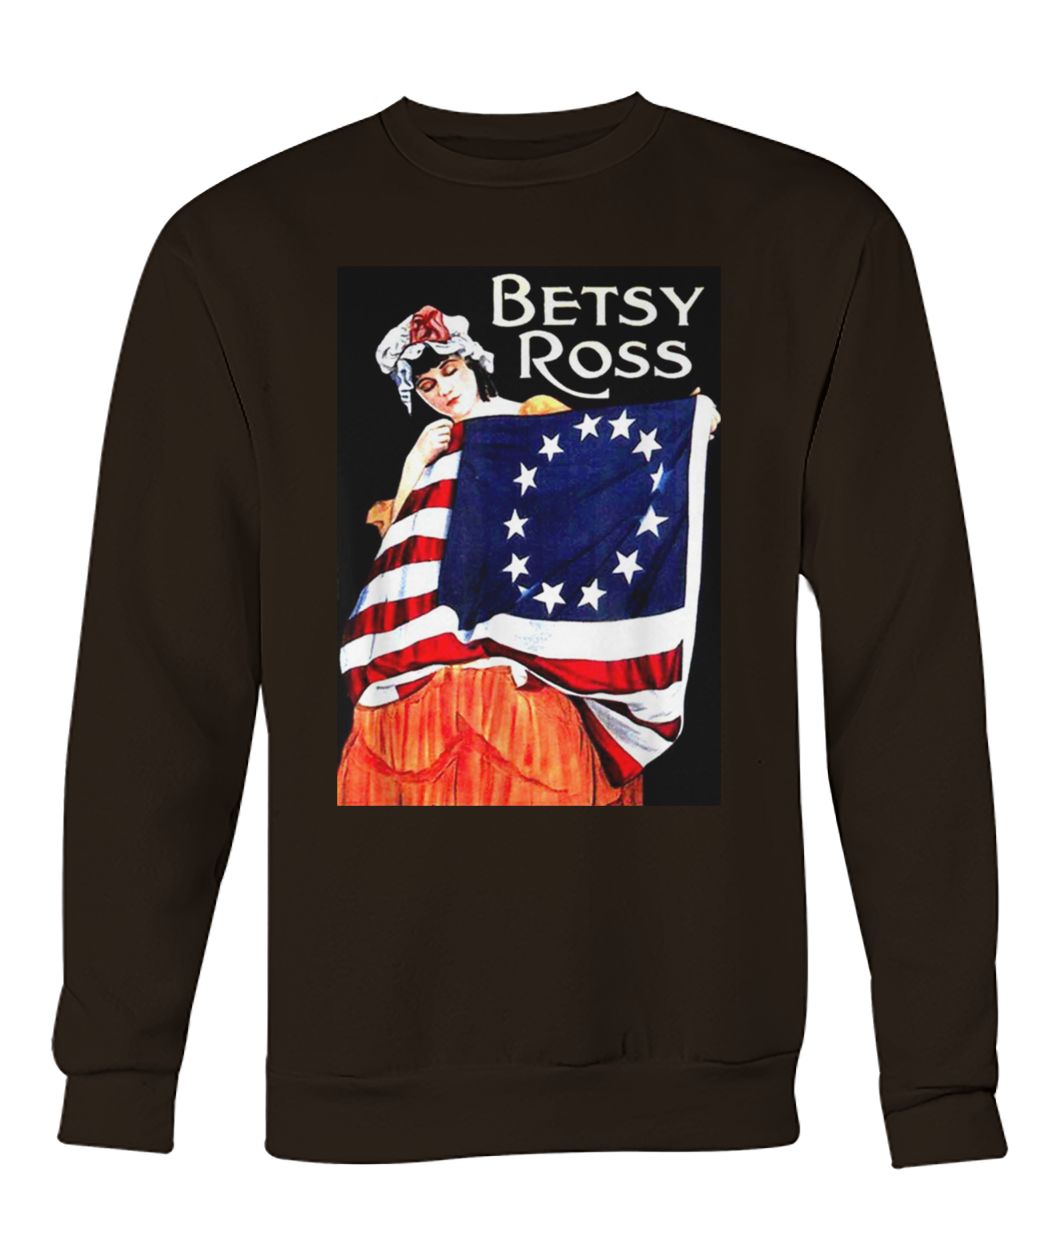 Betsy ross american flag 1776 4th of july crew neck sweatshirt